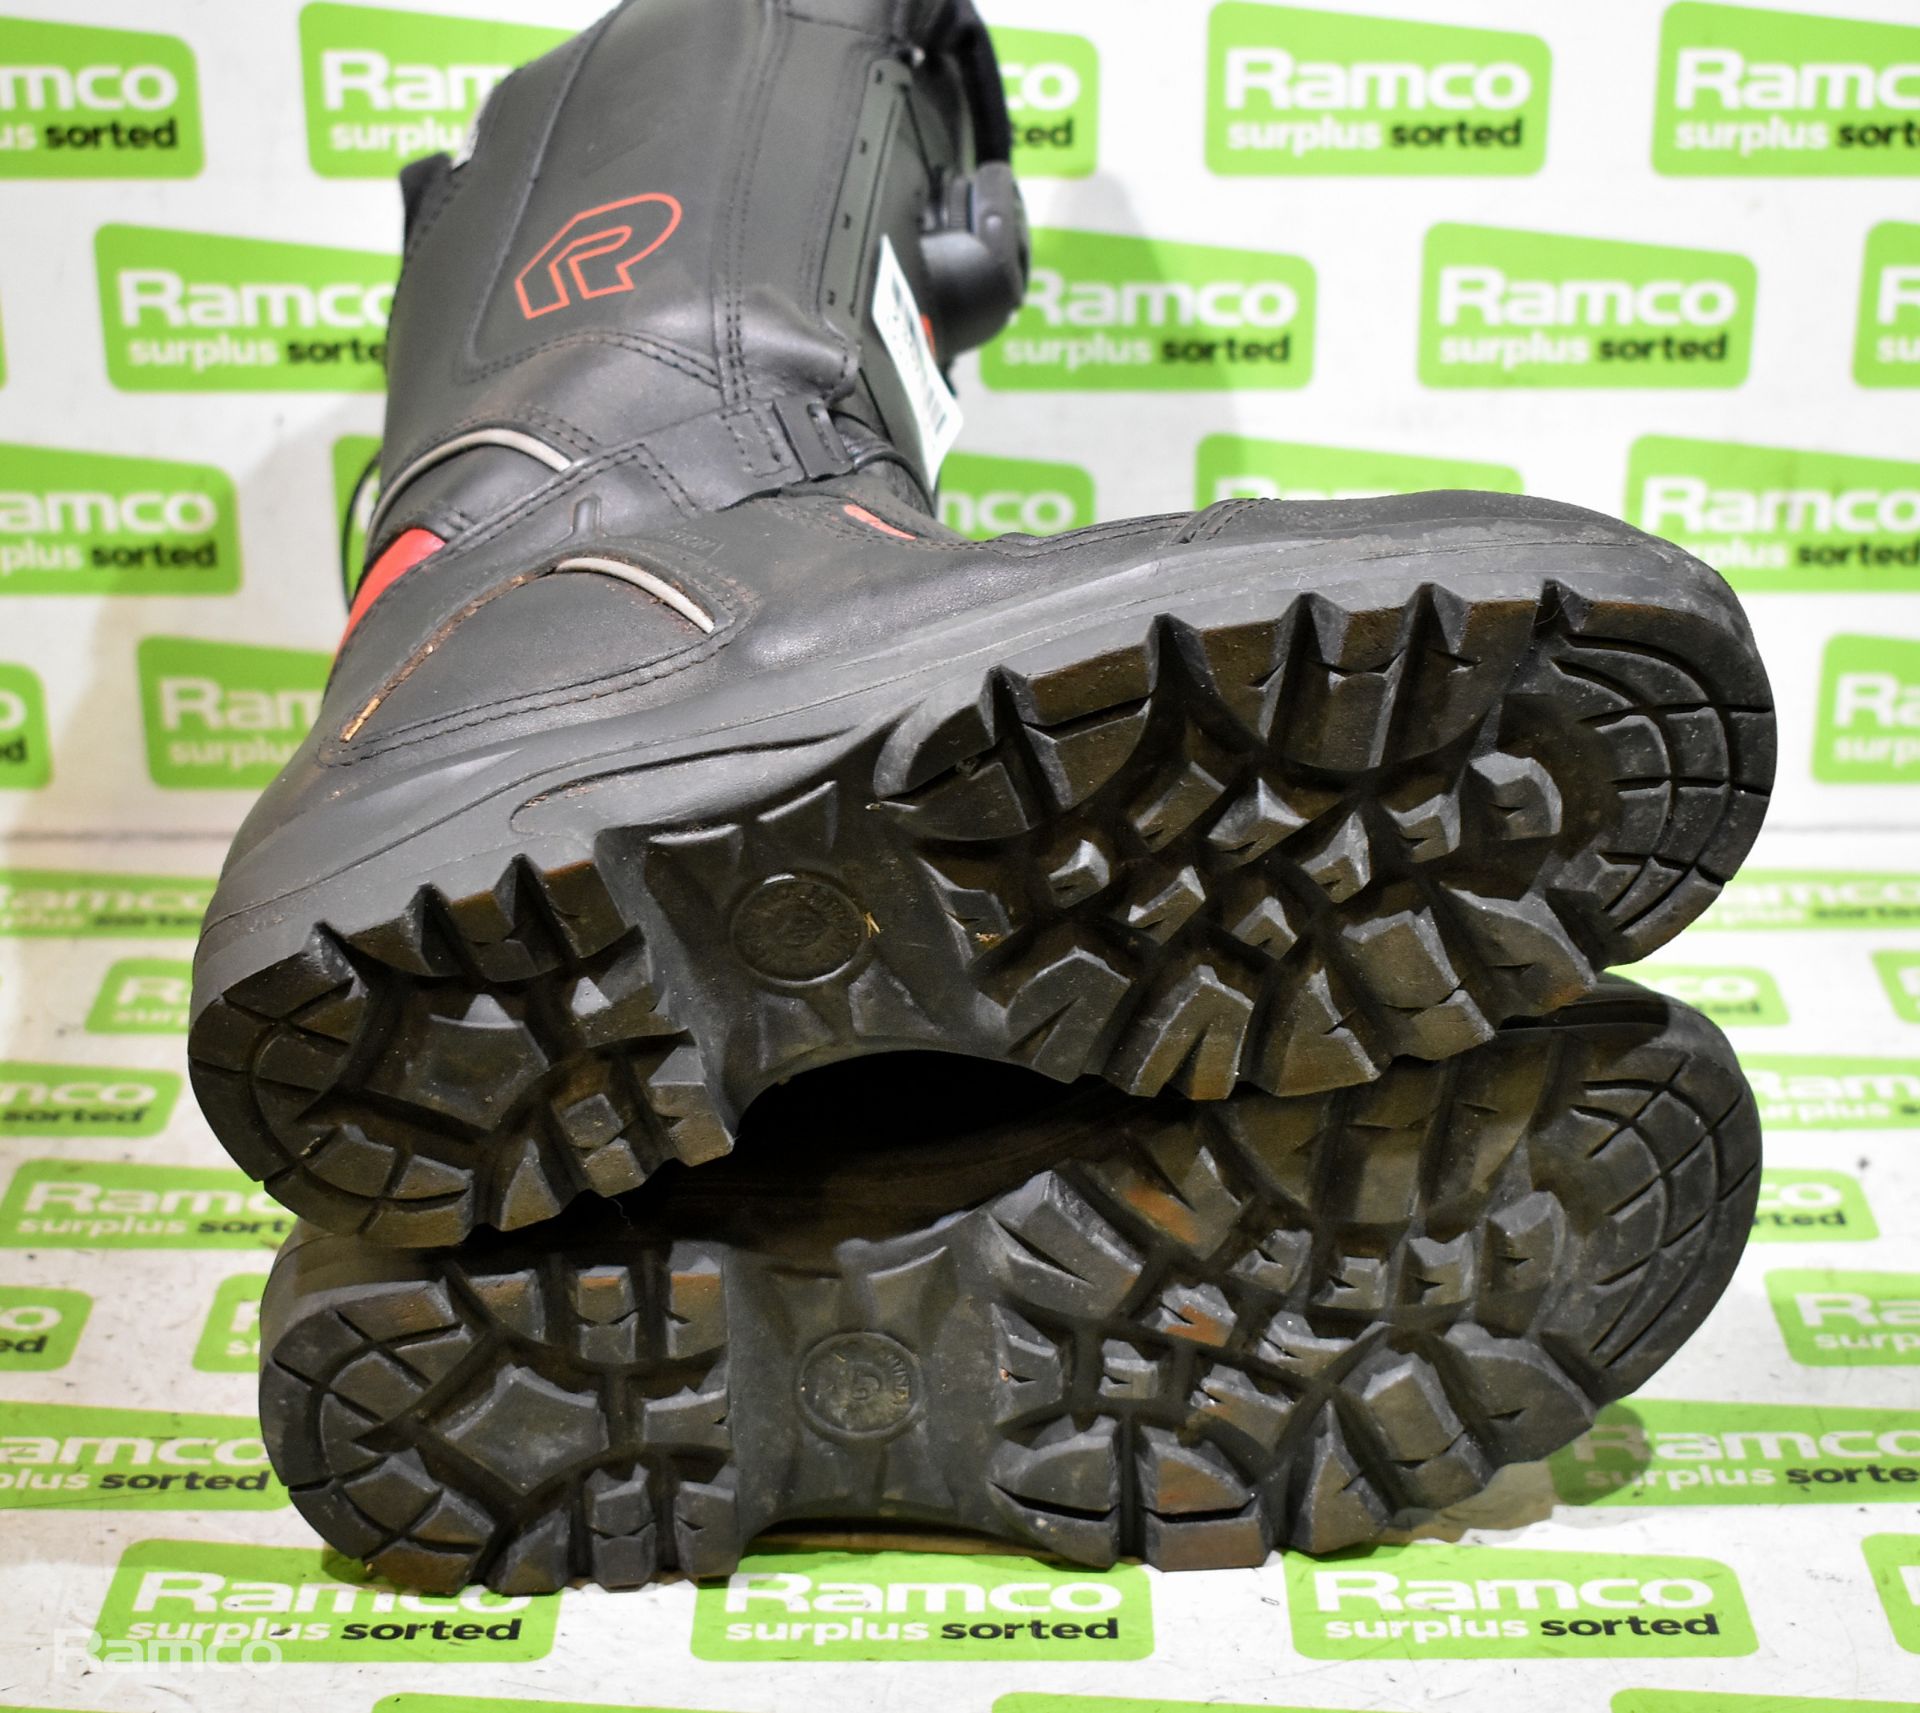 Rosenbauer Sympatex Fire & Heat Resistant Boots Pair - Size: EU 42, UK 8 - Image 4 of 4